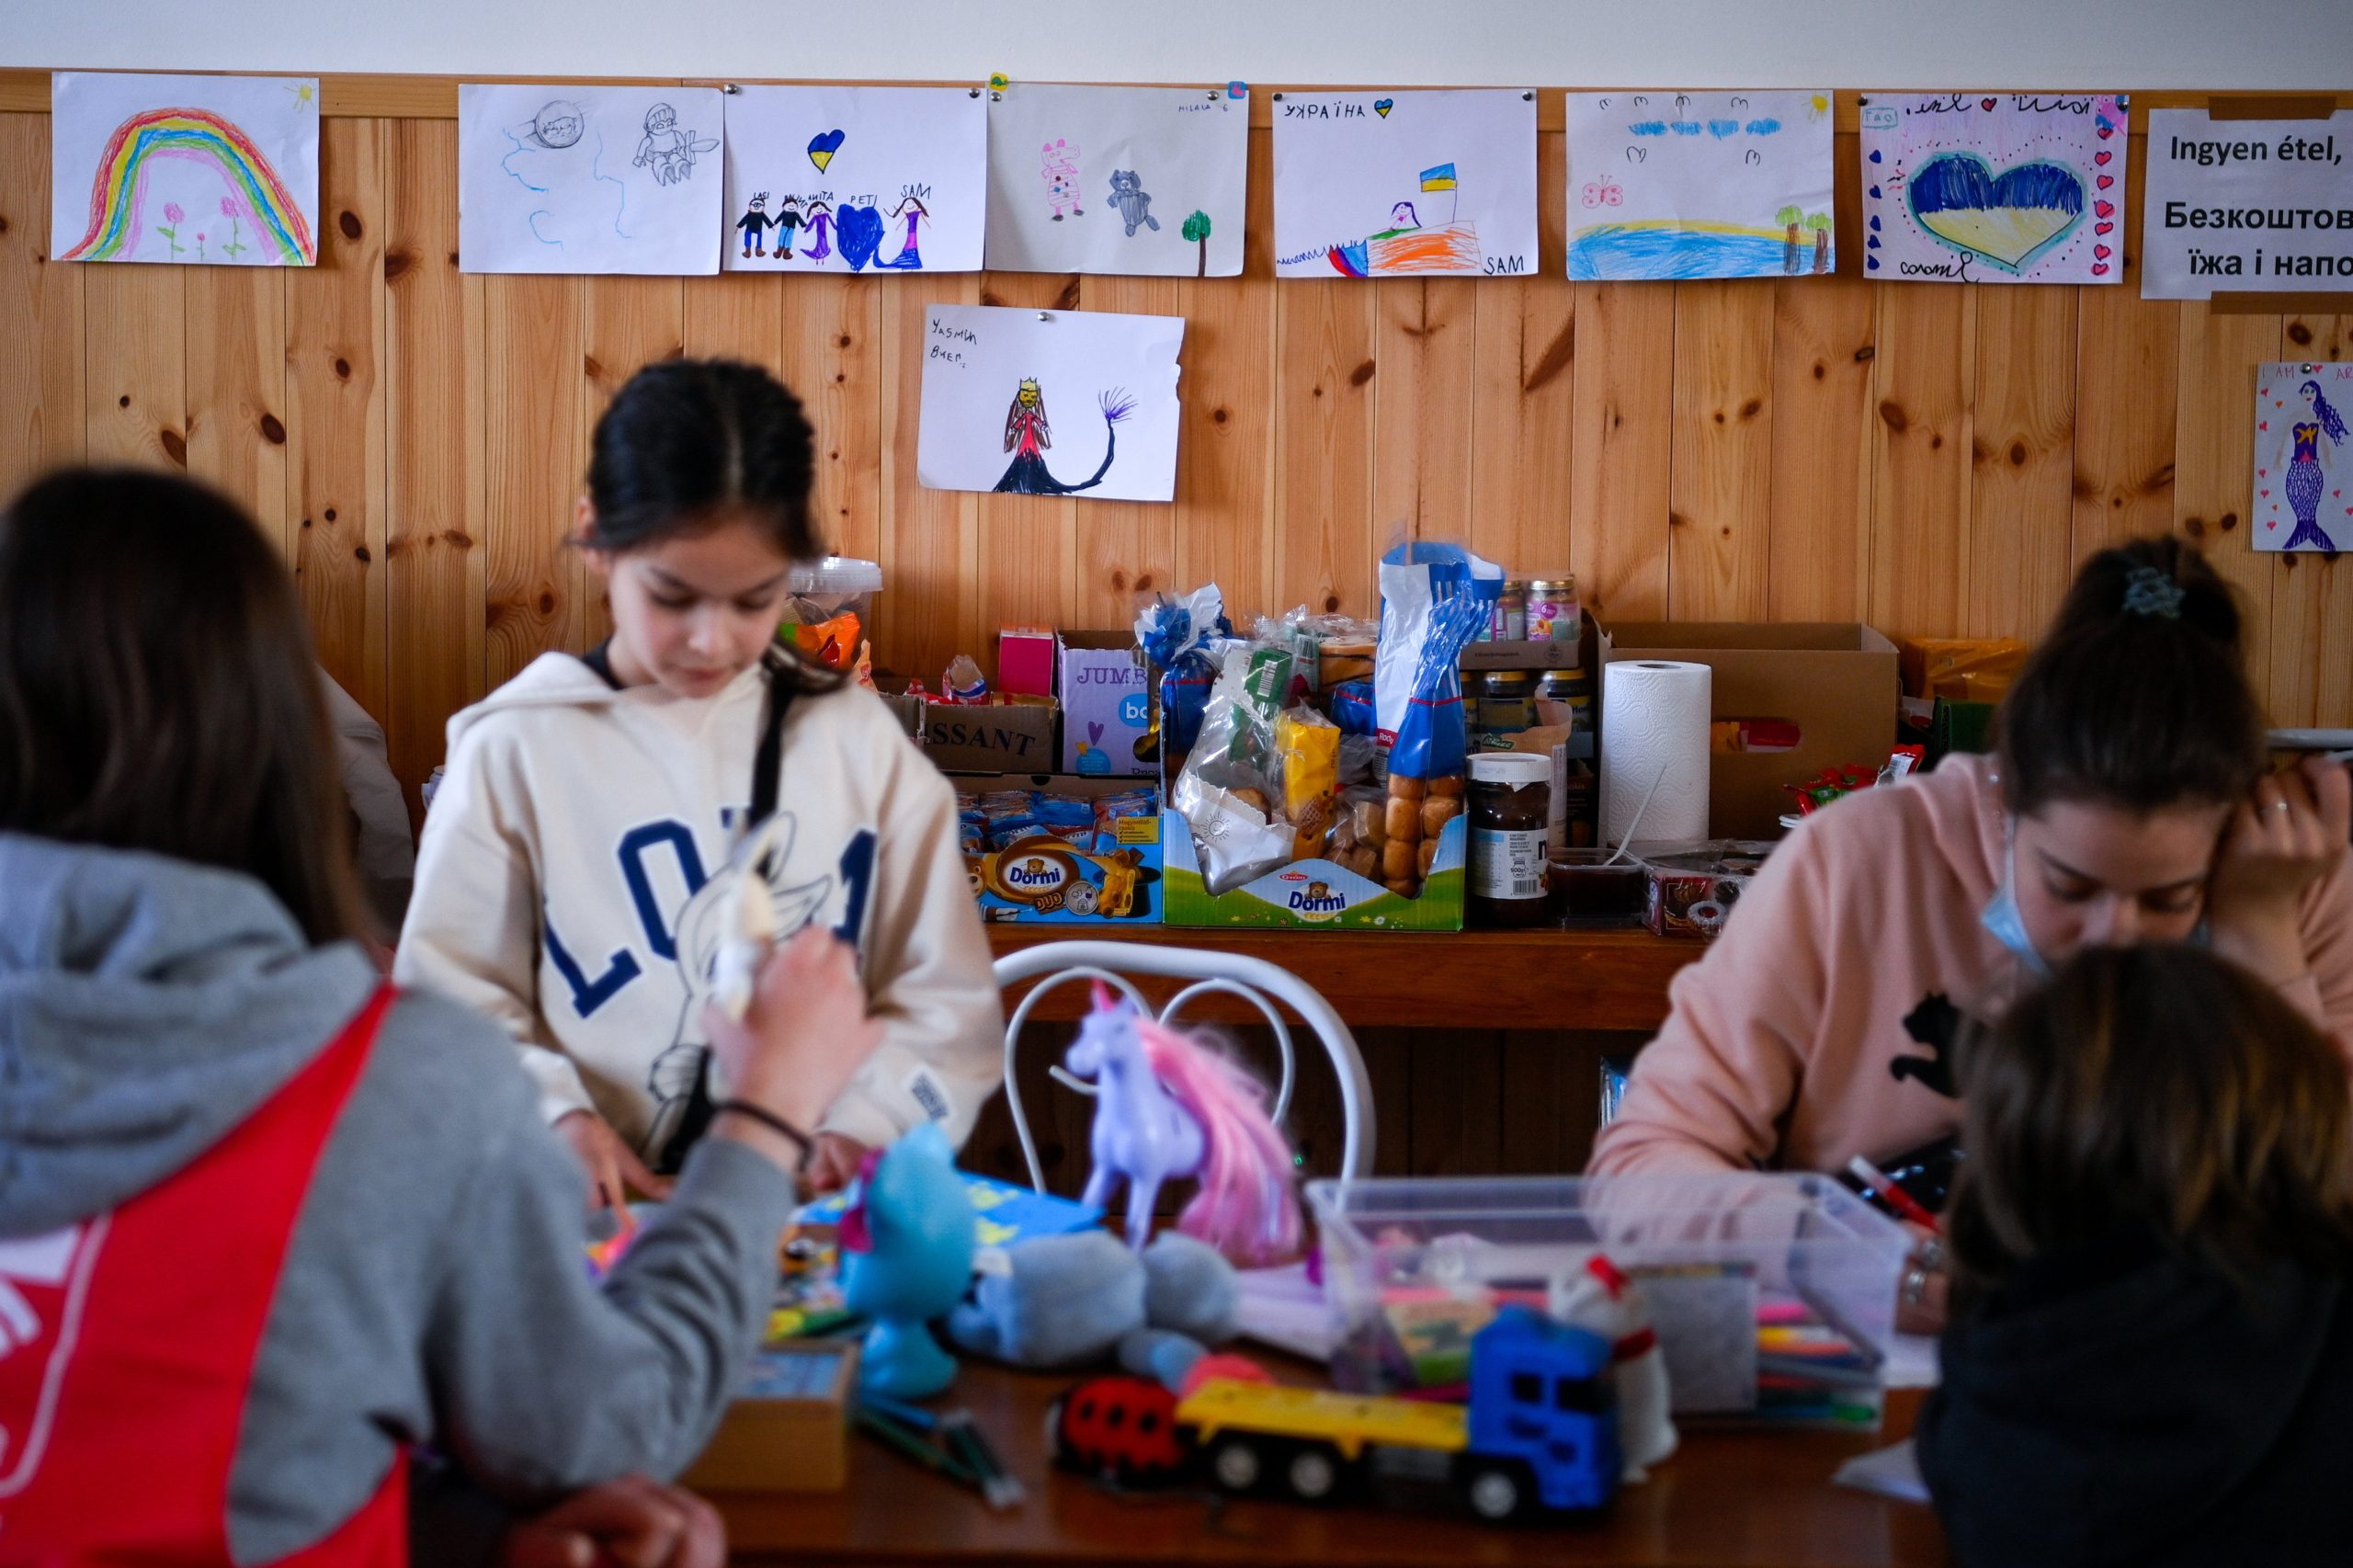 Hungary Ensures Schooling for Ukrainian Children - But How Will It Work?